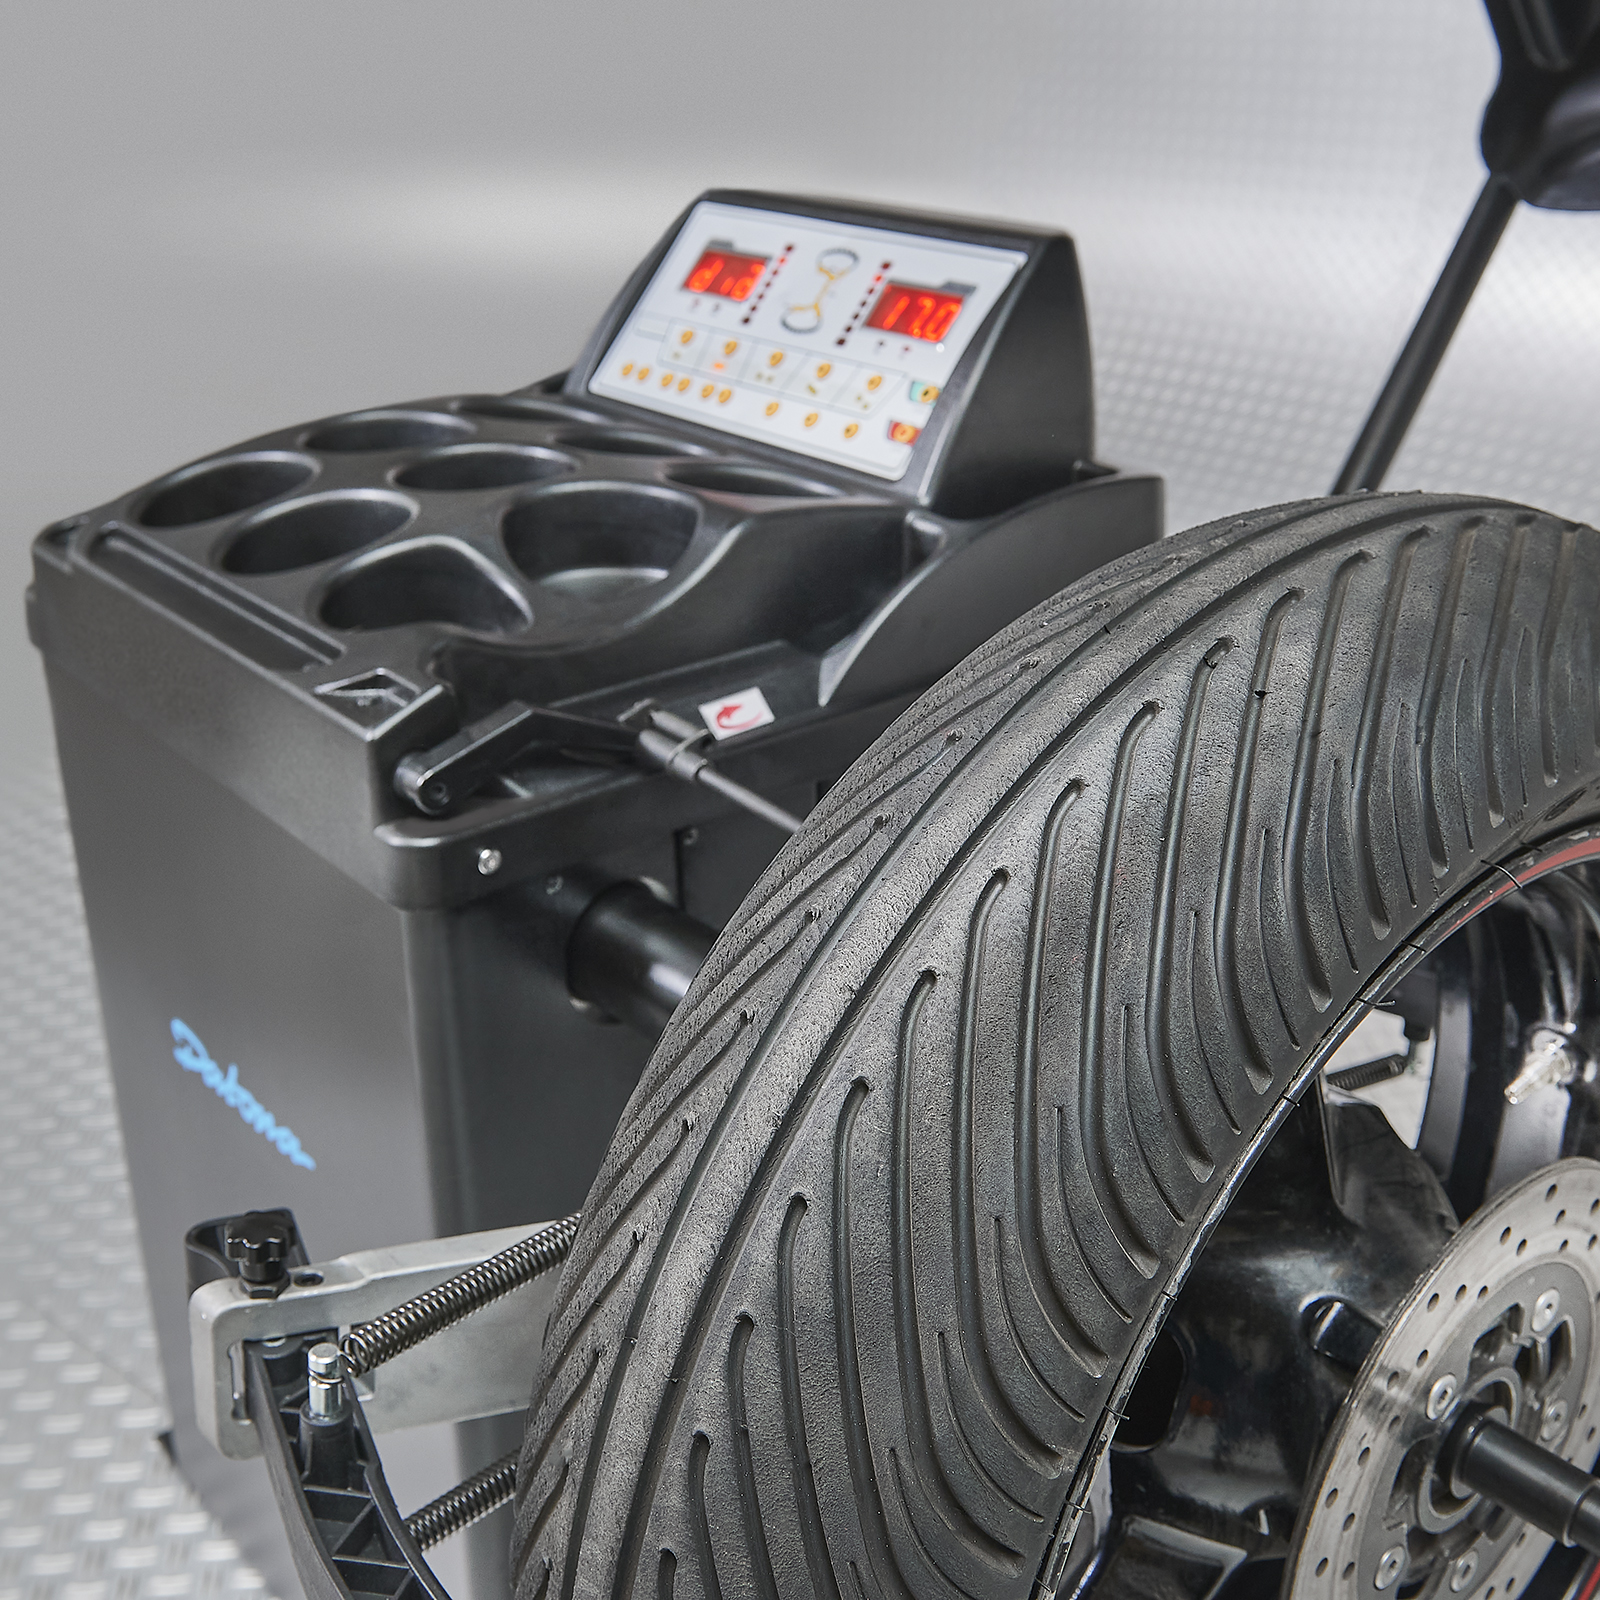 Equilibreuse de pneu 230v - Automatique - Mecatelier